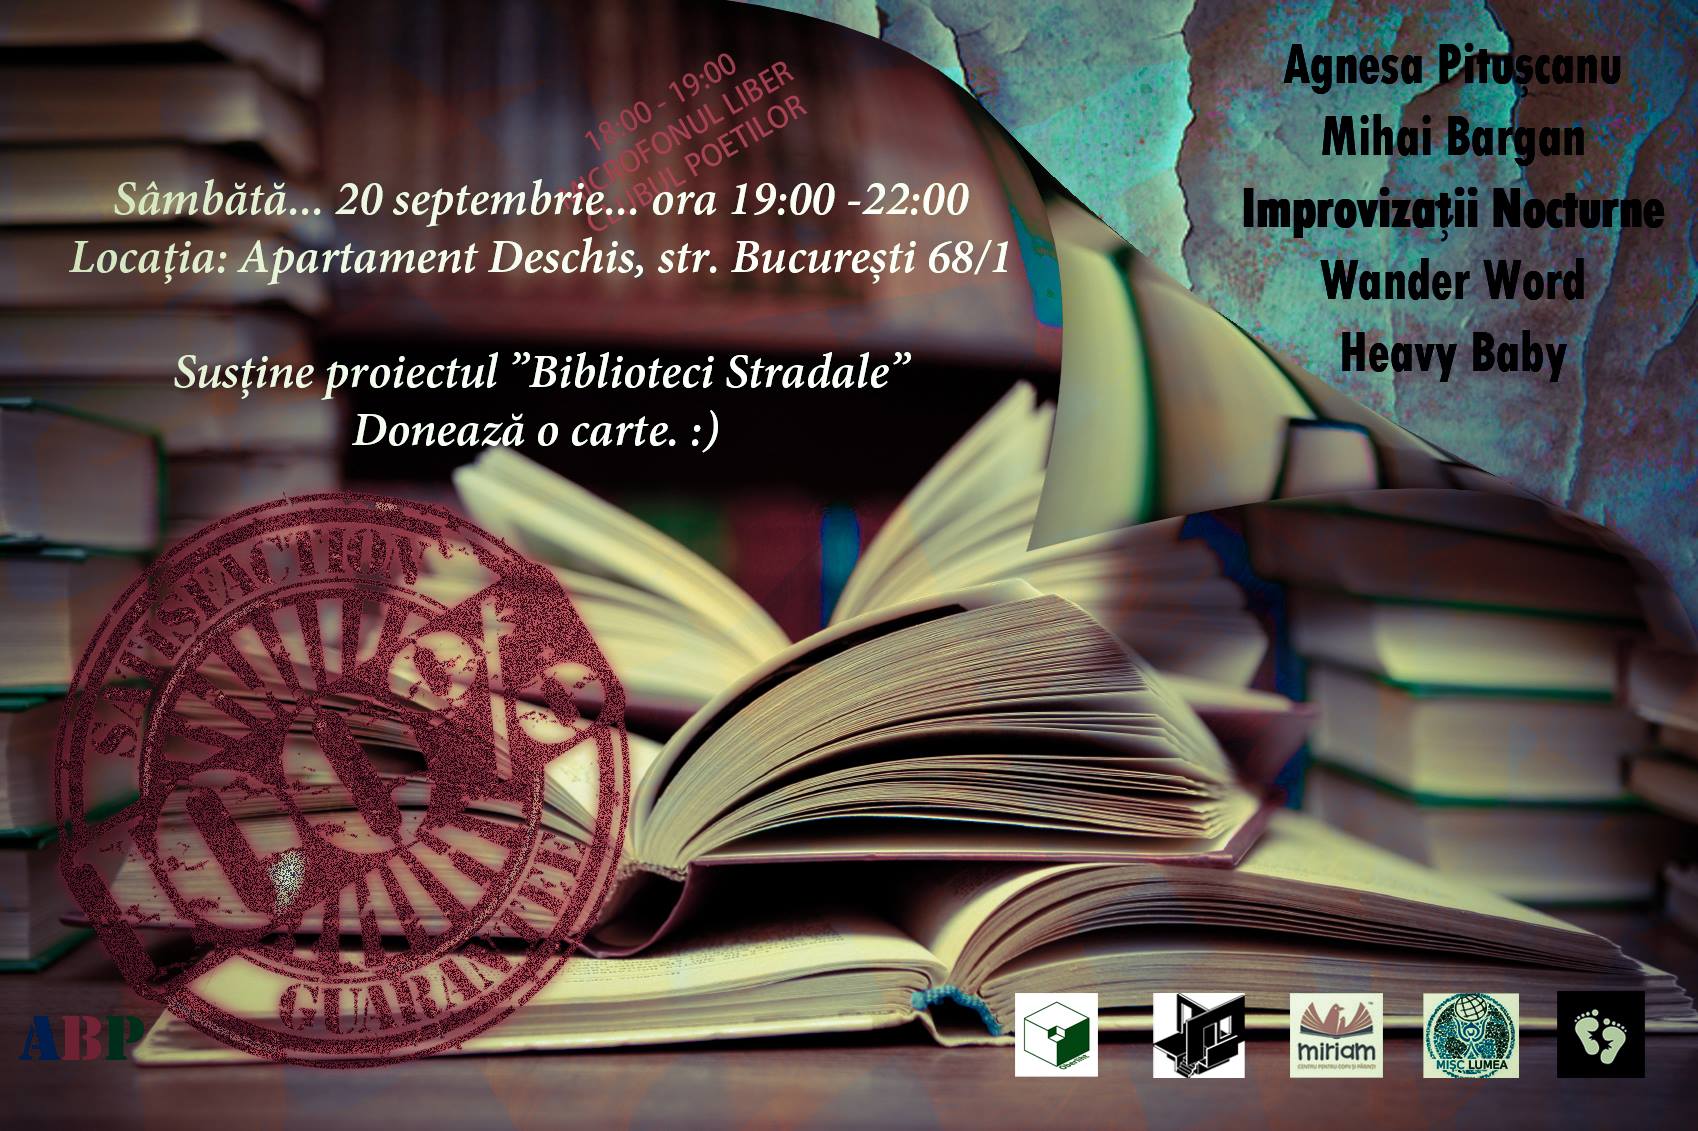 biblioateca_stradala_web